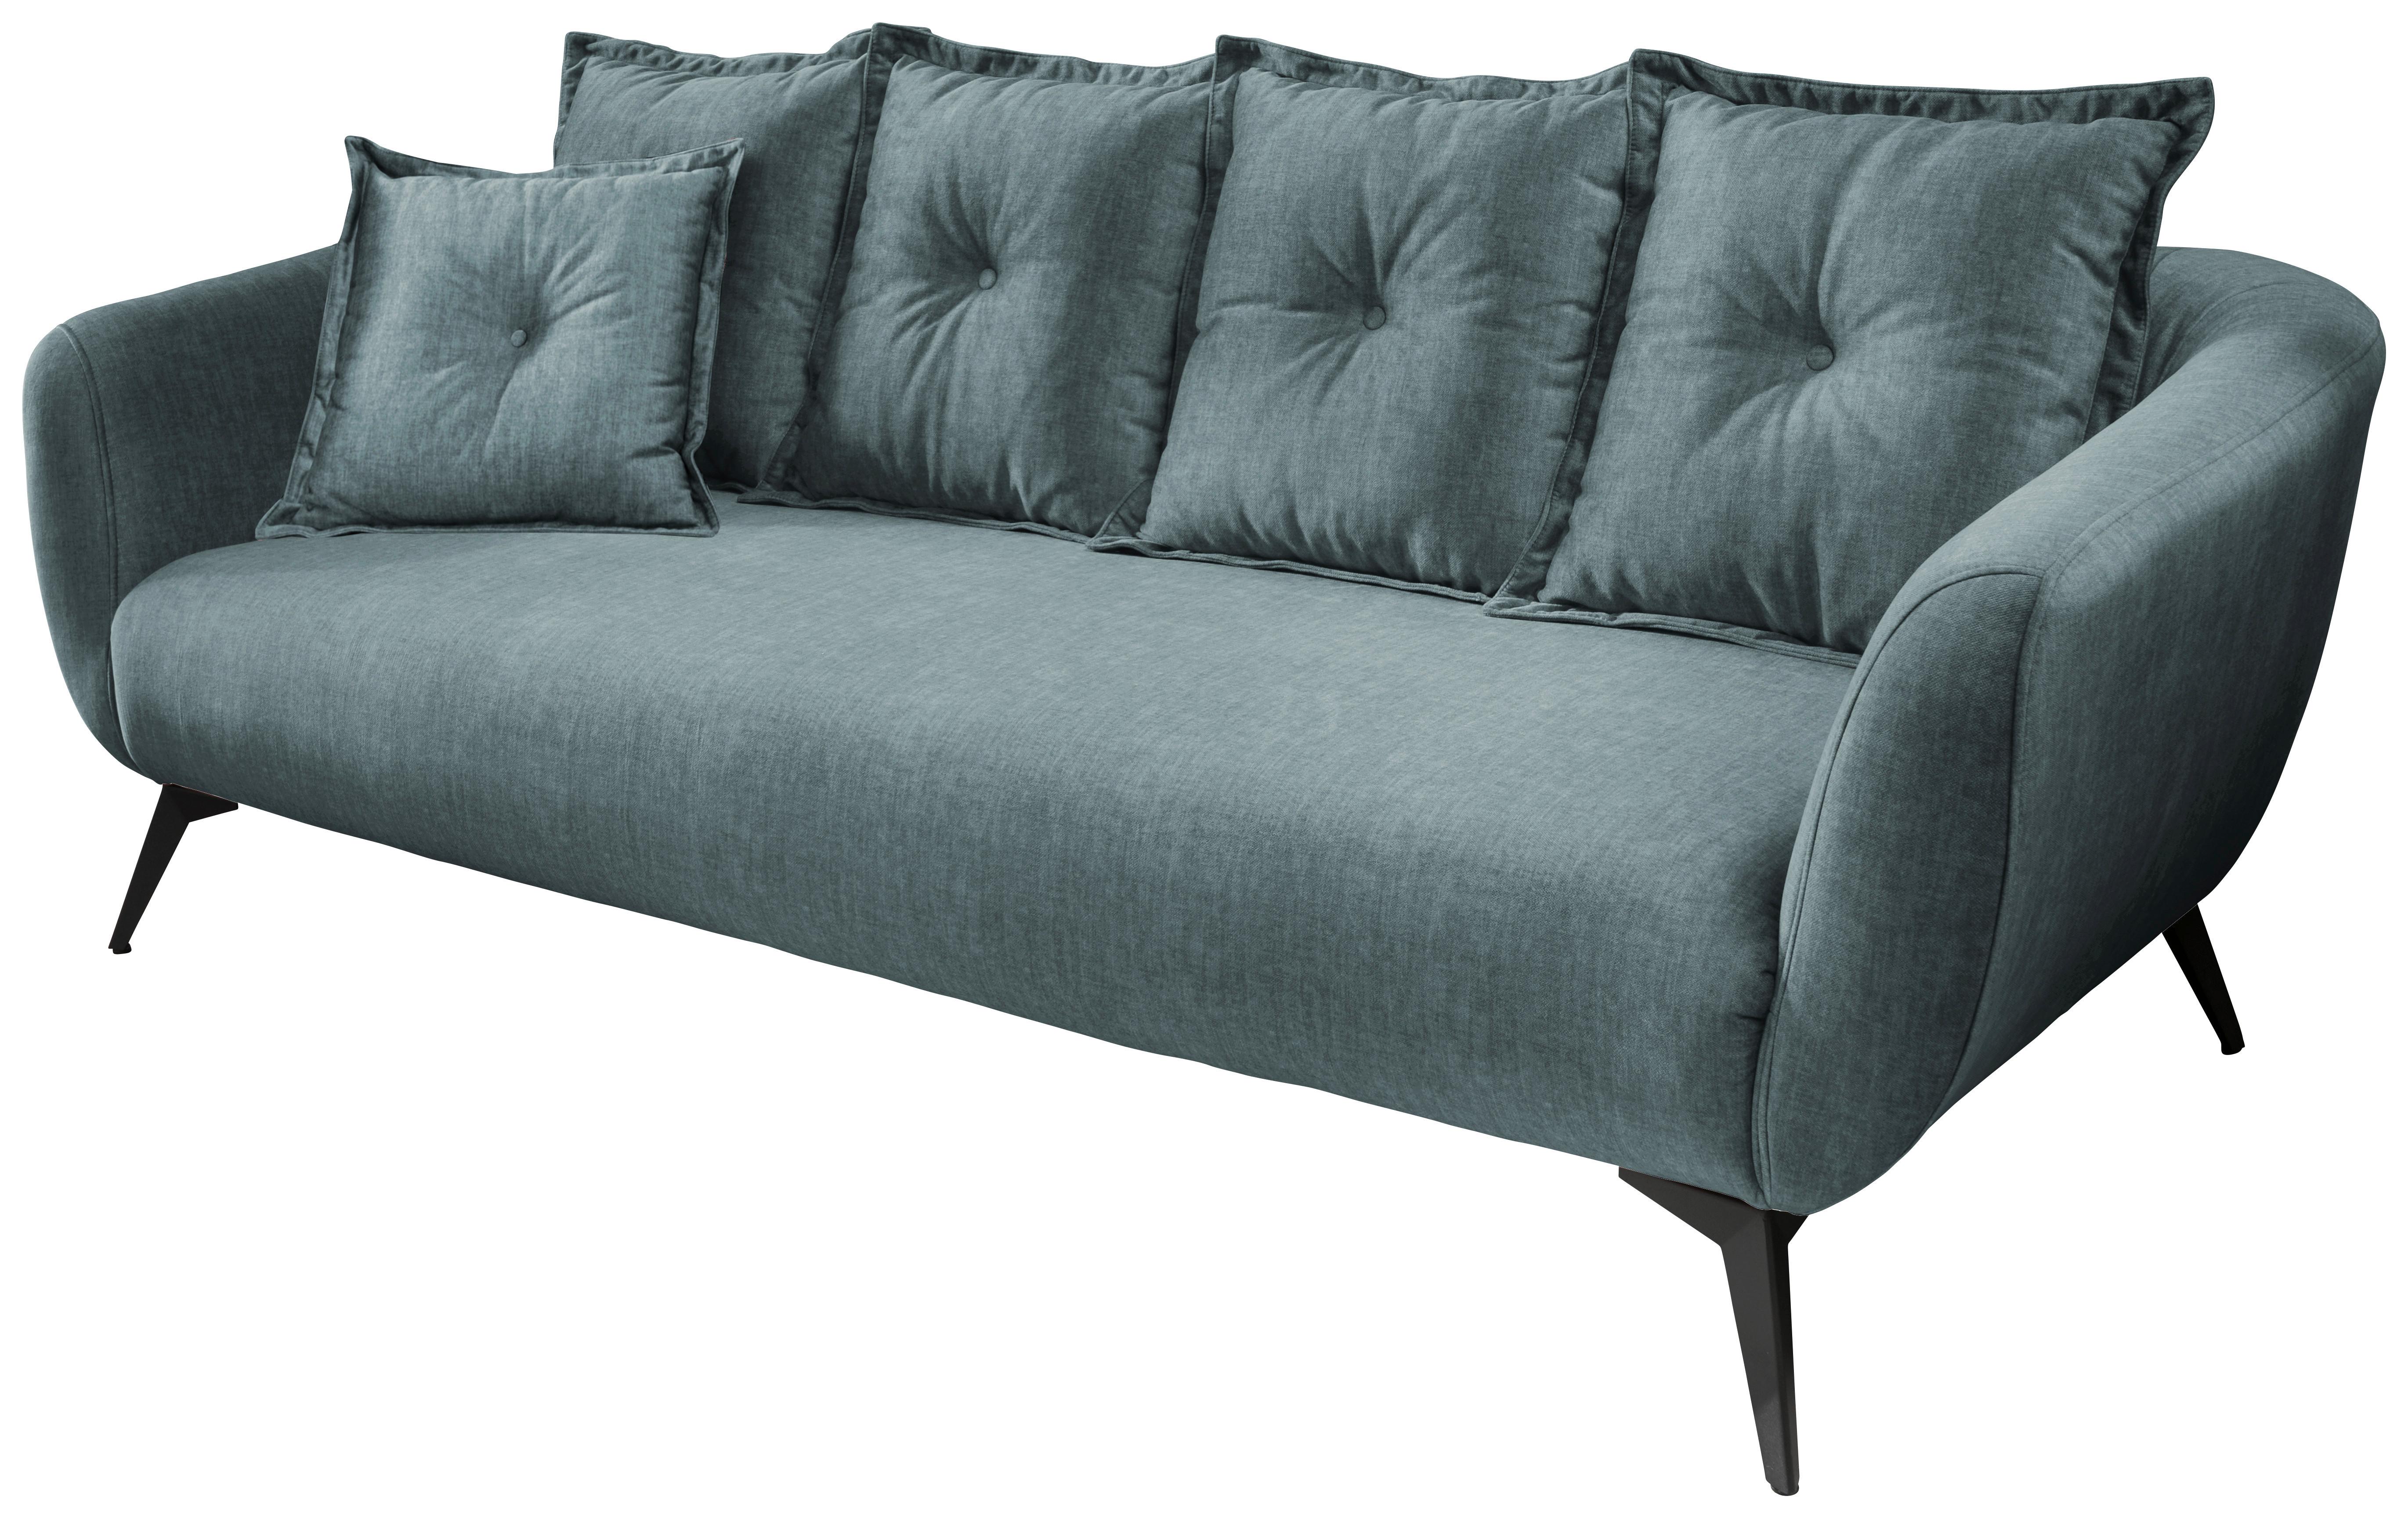 3-Sitzer-Sofa Baggio mit Kissen Blau - Blau/Dunkelgrün, MODERN, Holz/Textil (236/94/103cm) - Livetastic